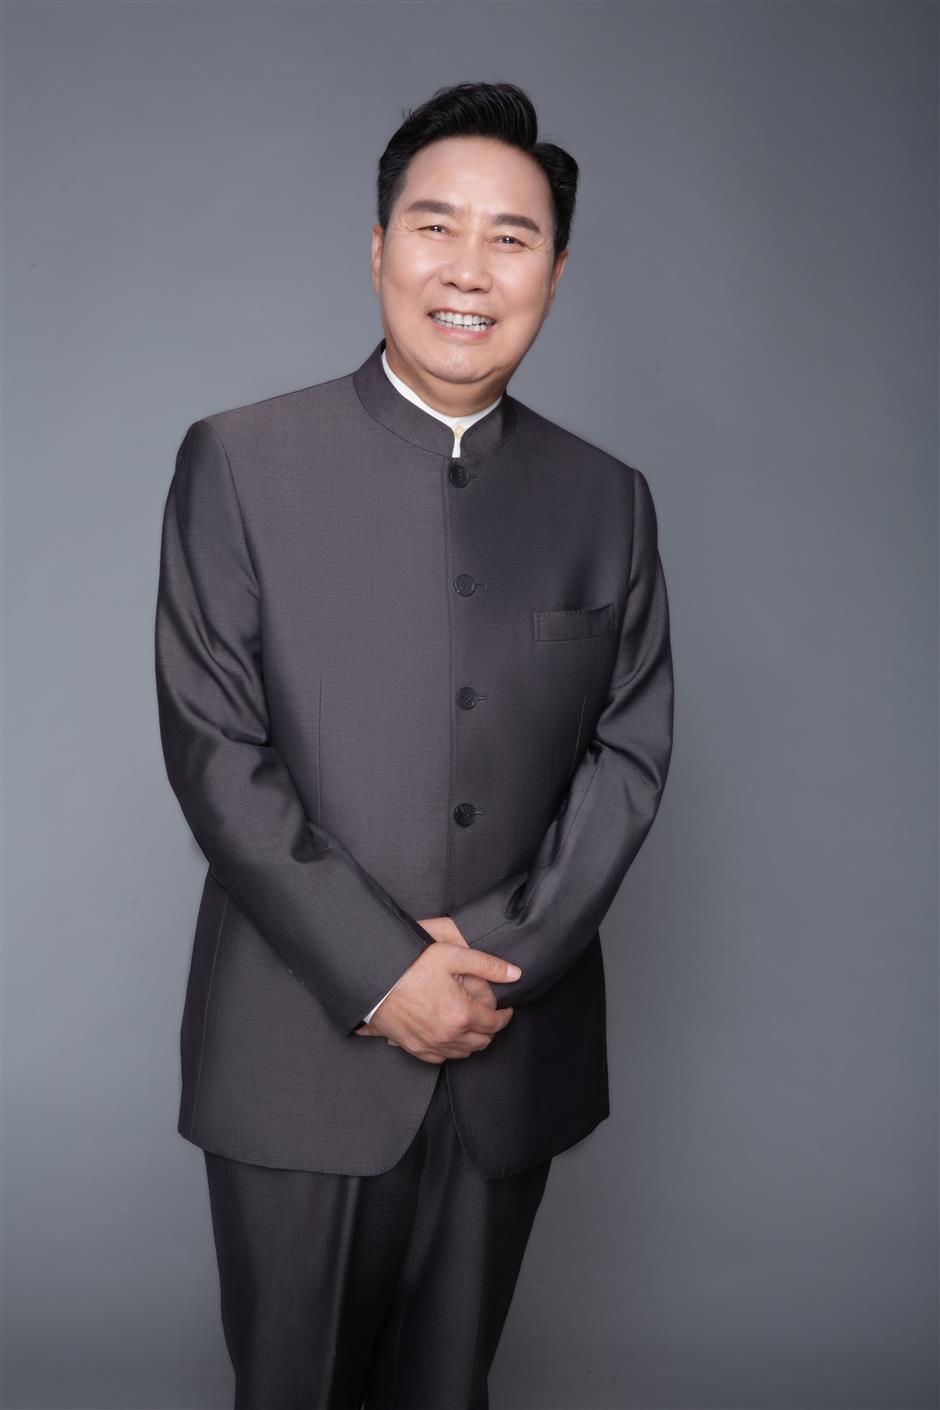 Yuju Opera master Li Shujian to present shows at Yuyuan Garden Malls